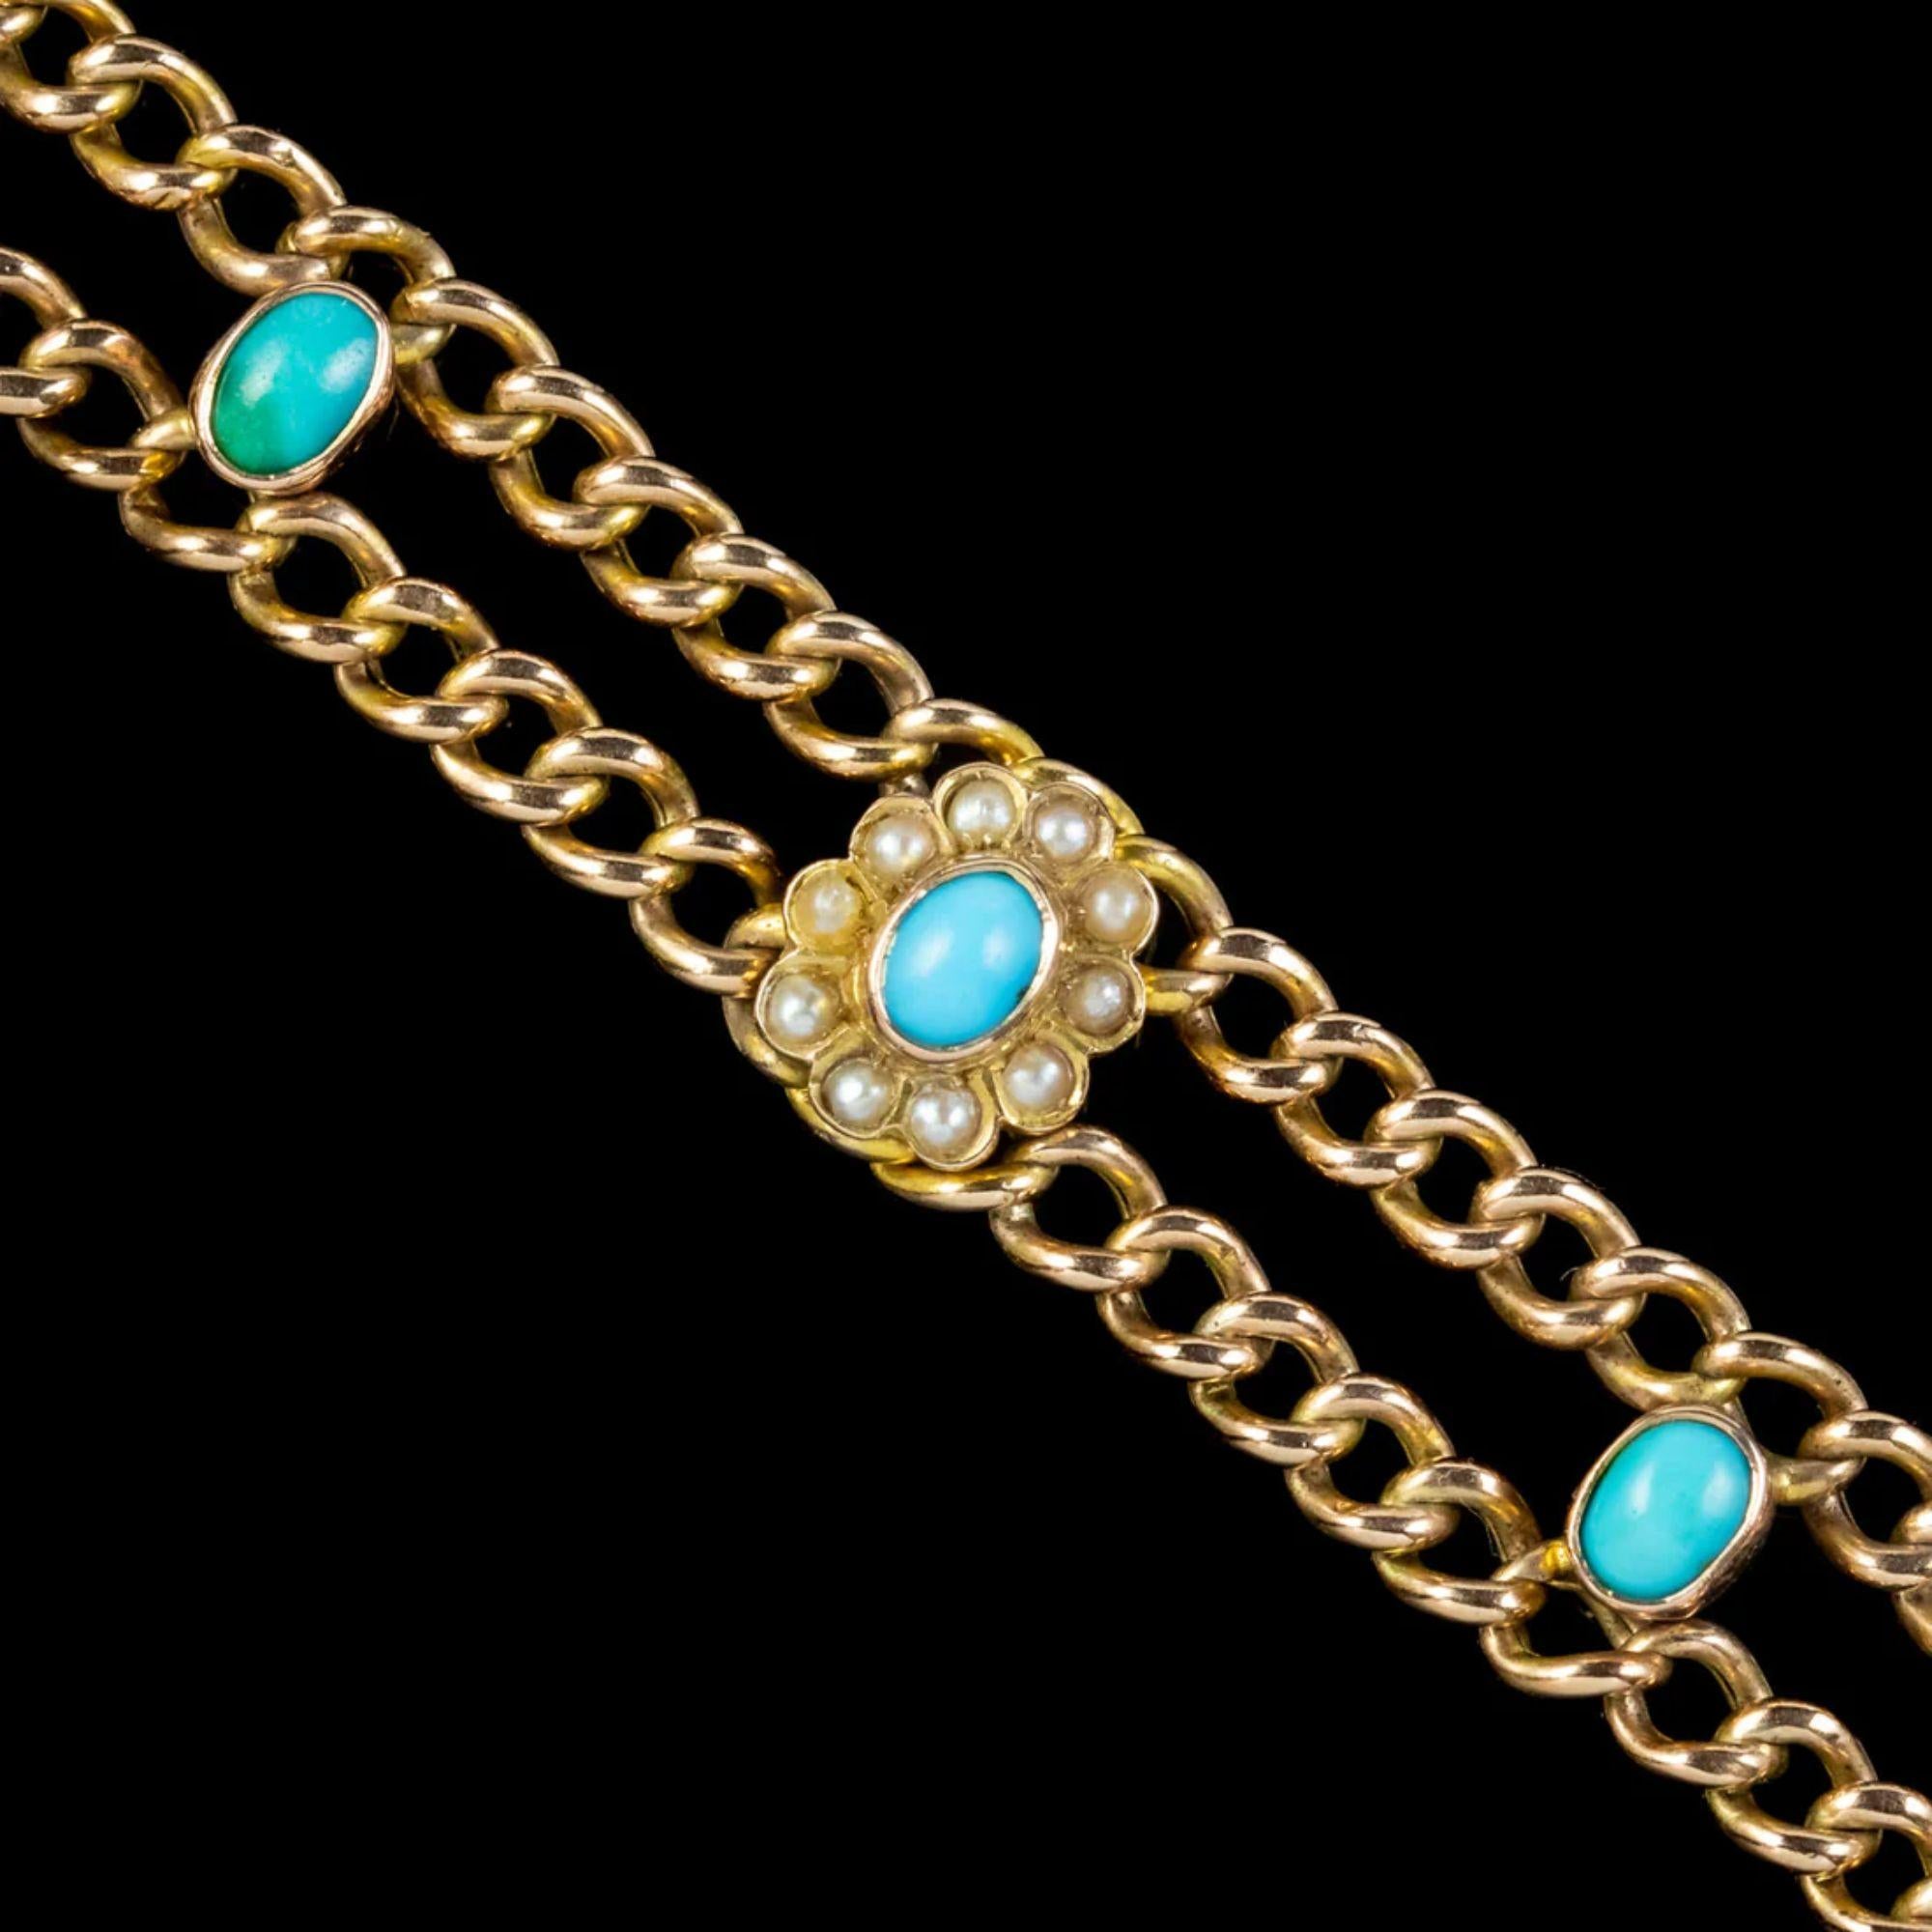 9ct gold pearl bracelet